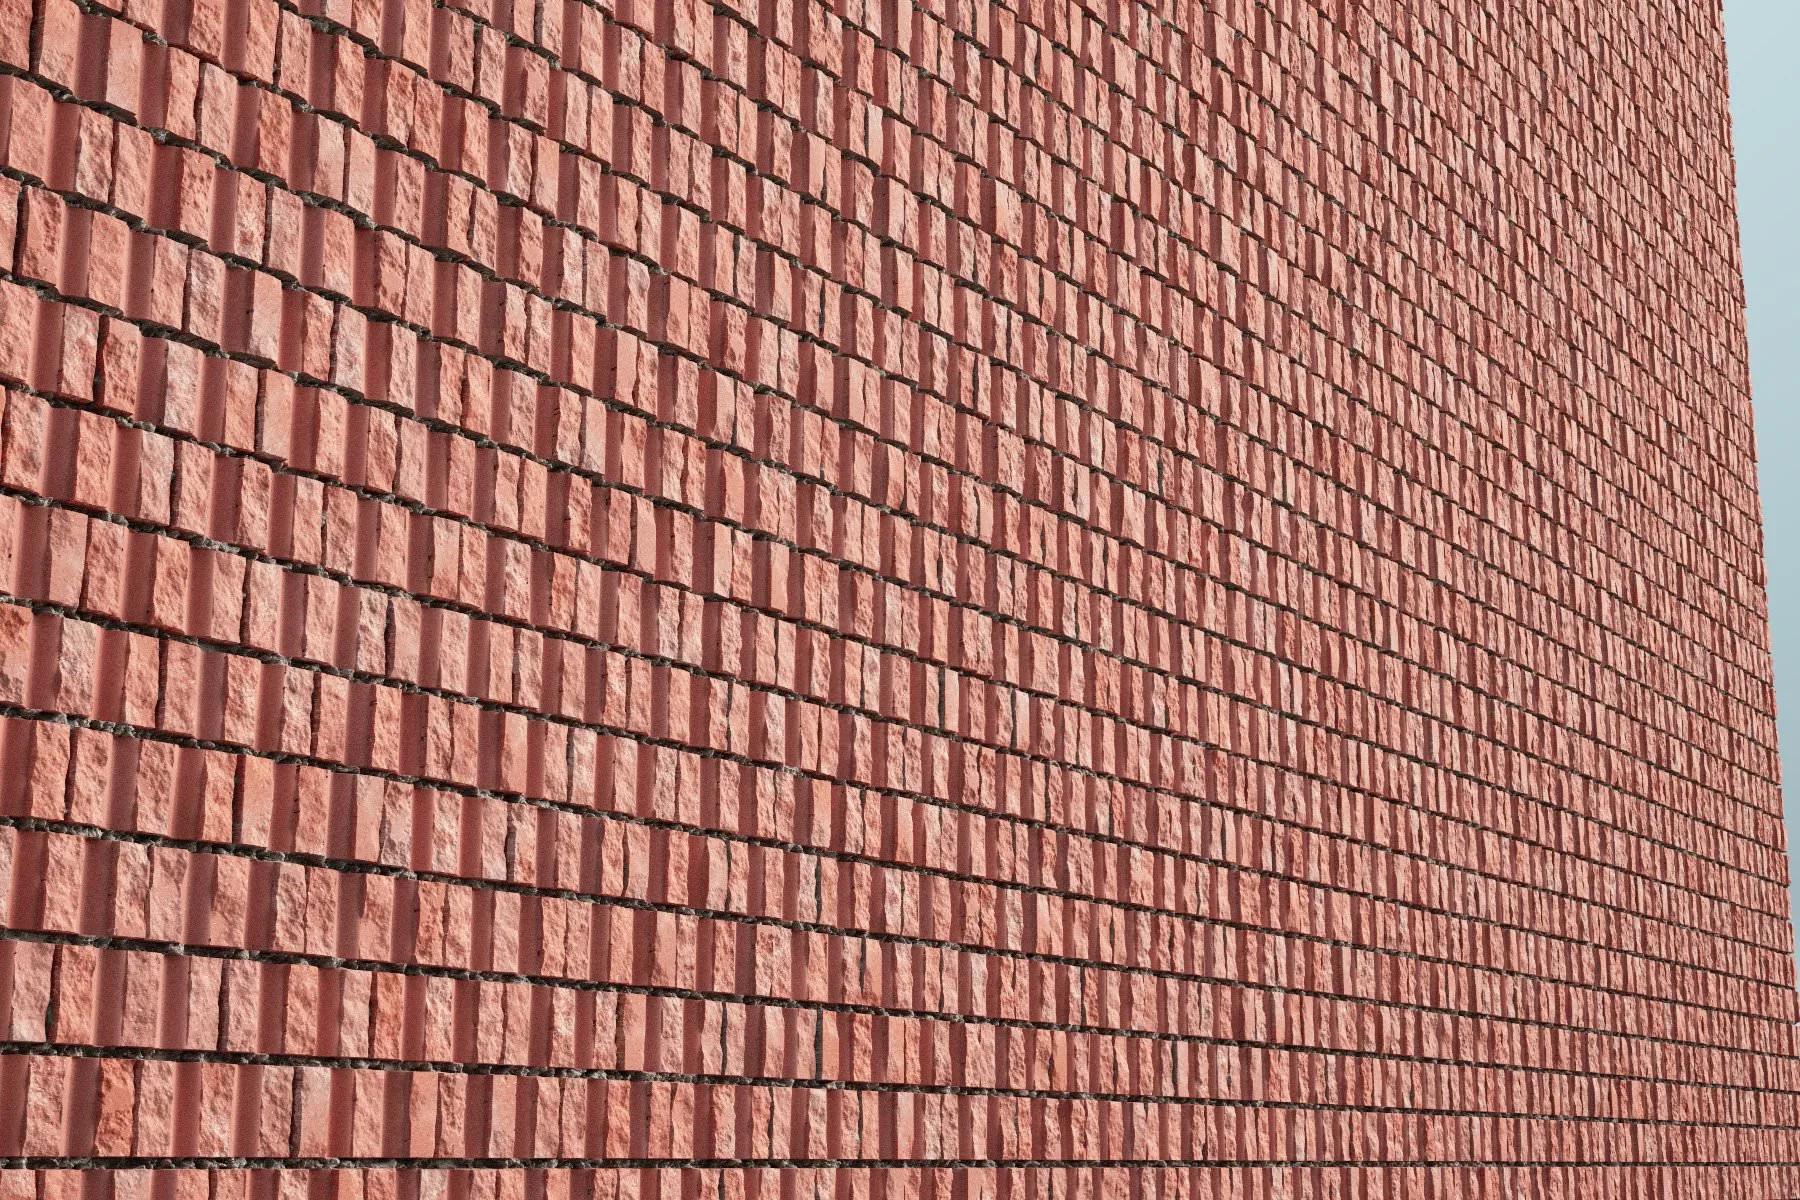 Bricks vol07 Corrugated 8K Seamless PBR Materials